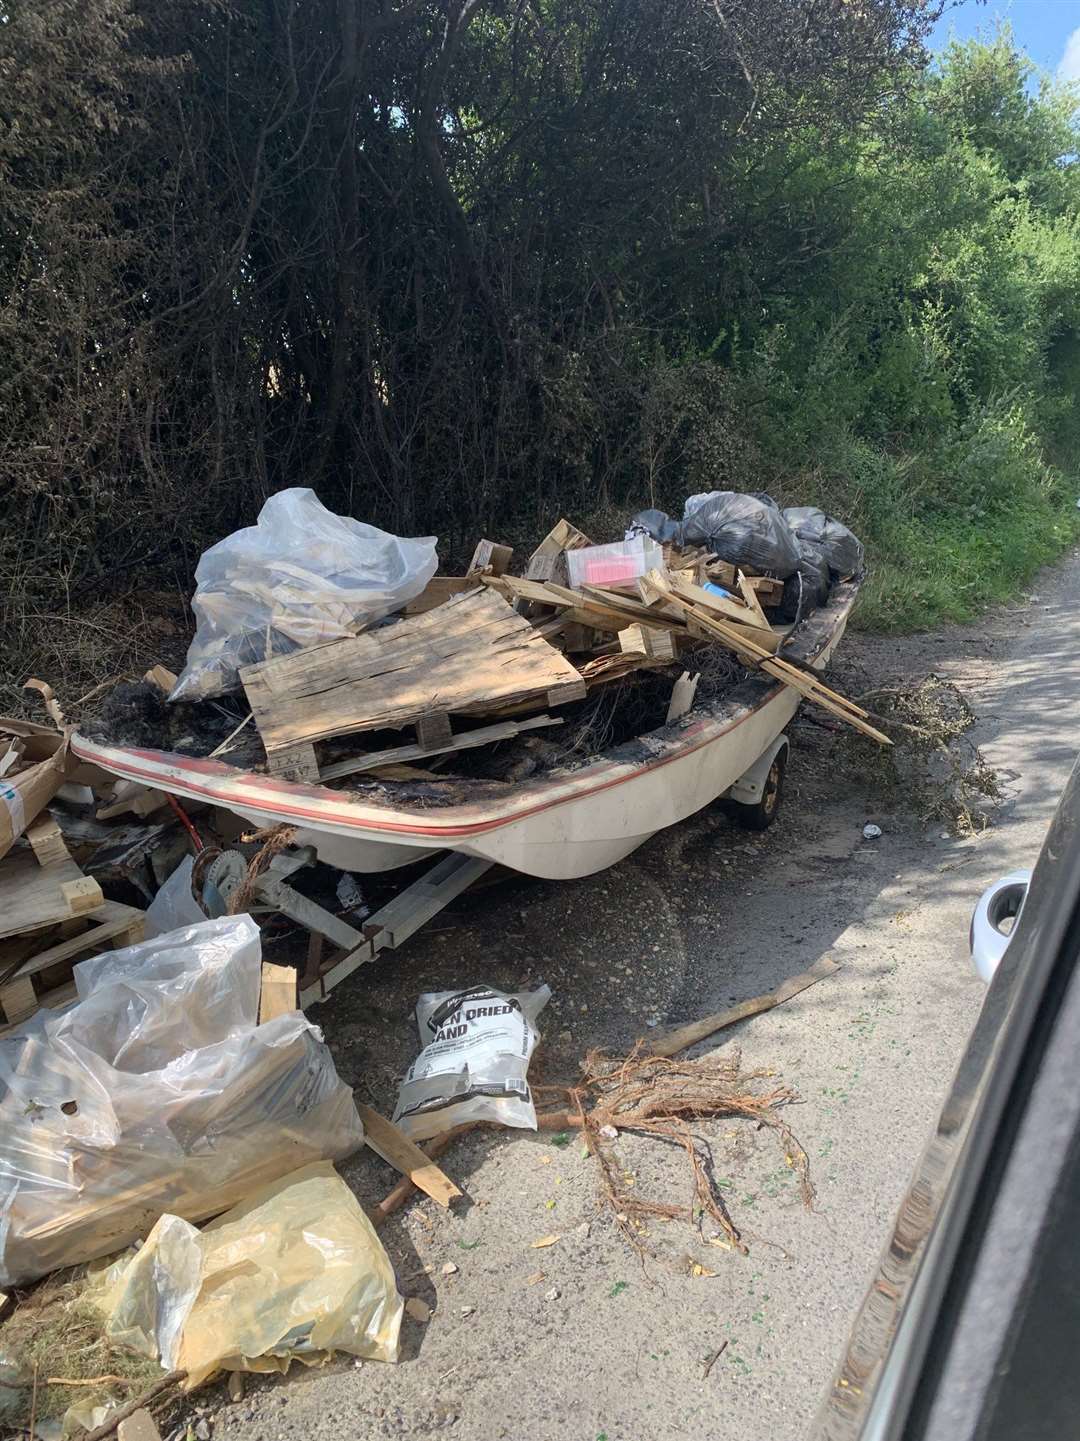 A boat full of rubbish was dumped in Shawstead Road, Chatham. Image: Glenda Crumpton